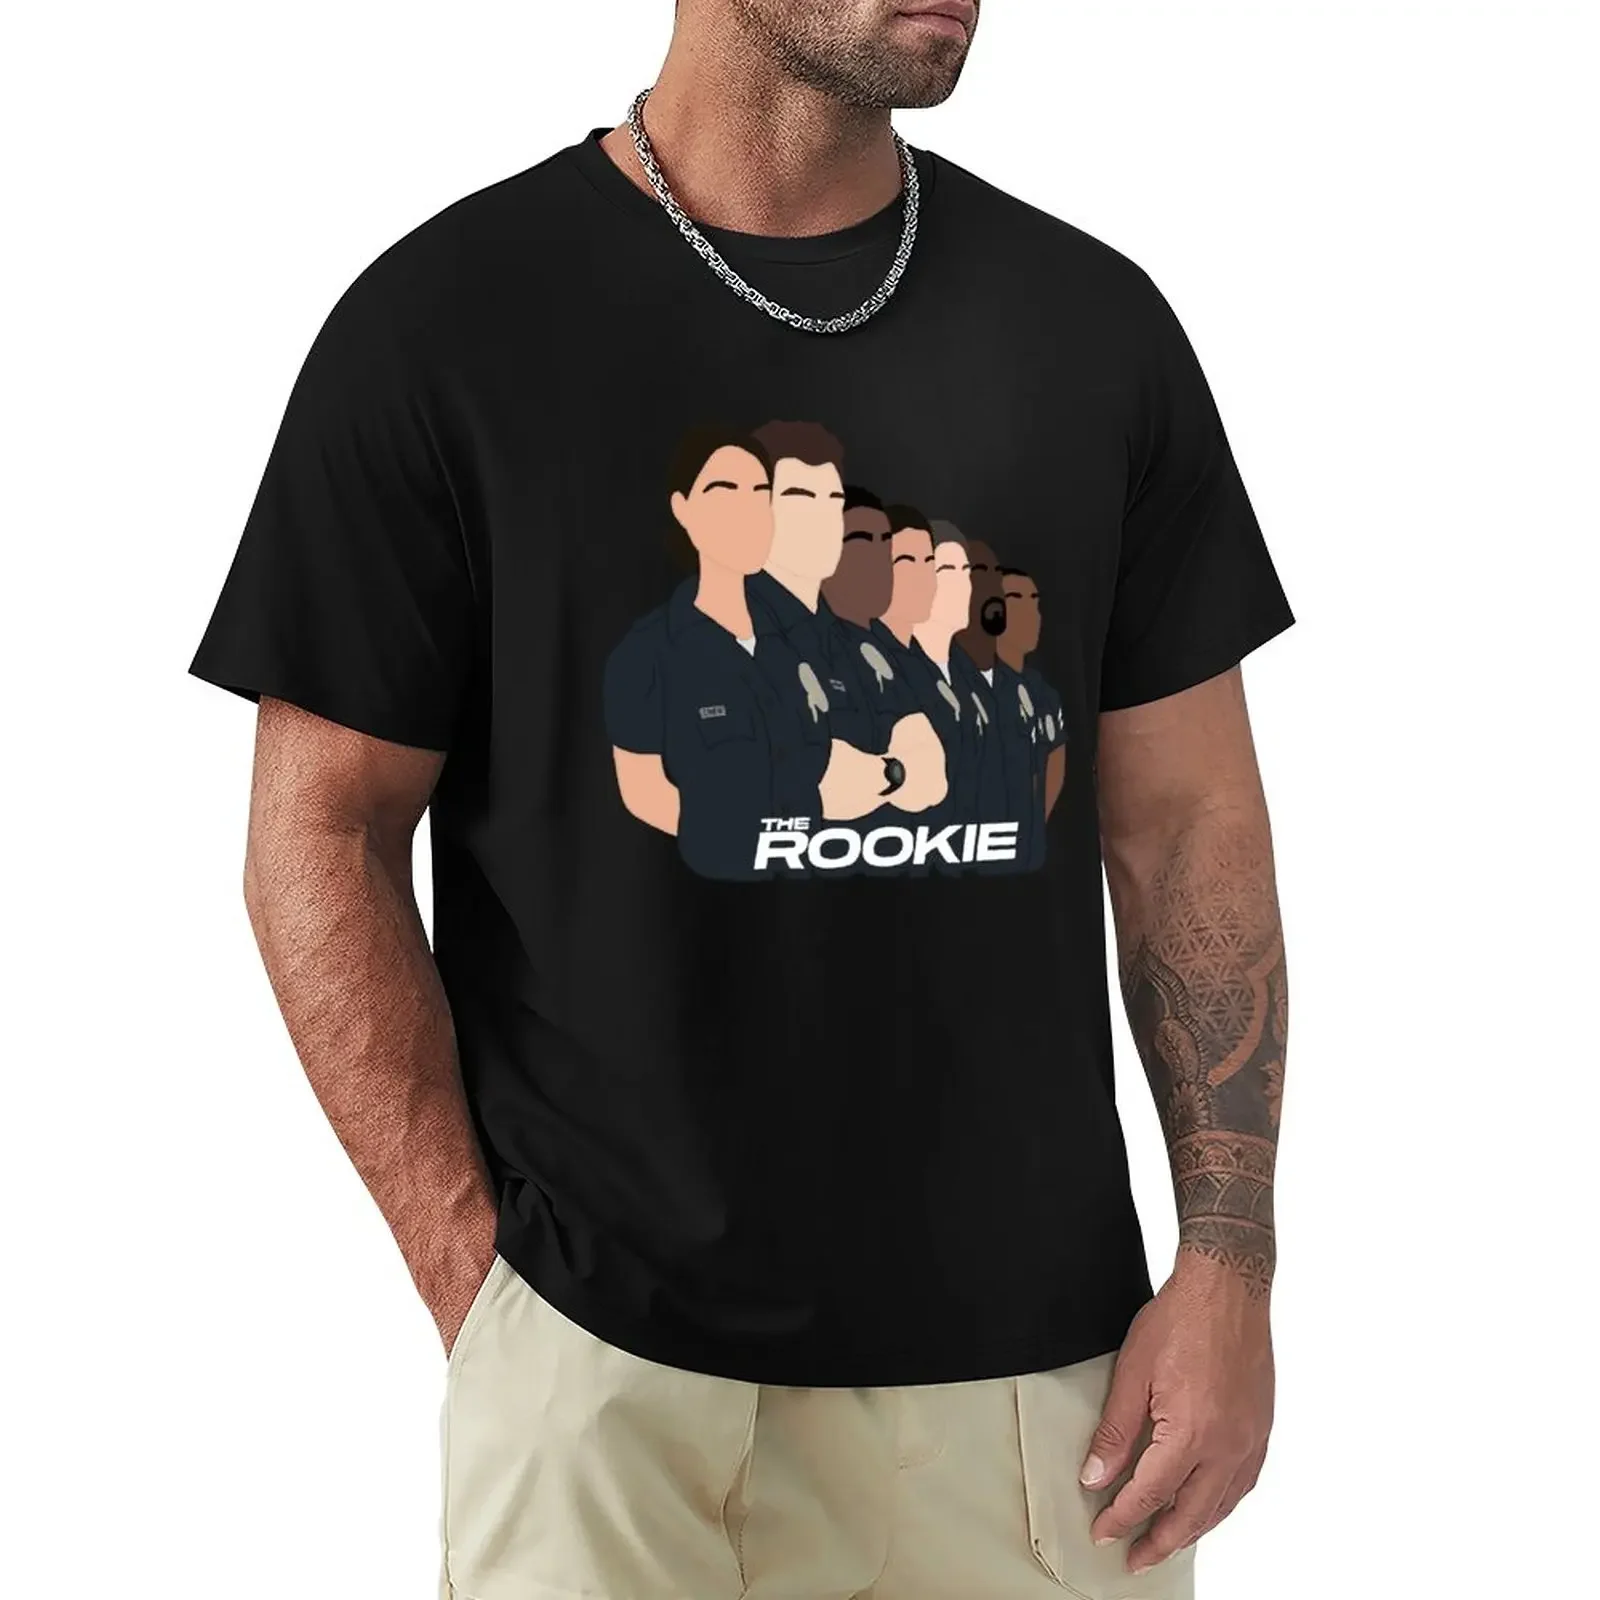 

Мужская футболка с принтом животного The Rookie, футболка оверсайз